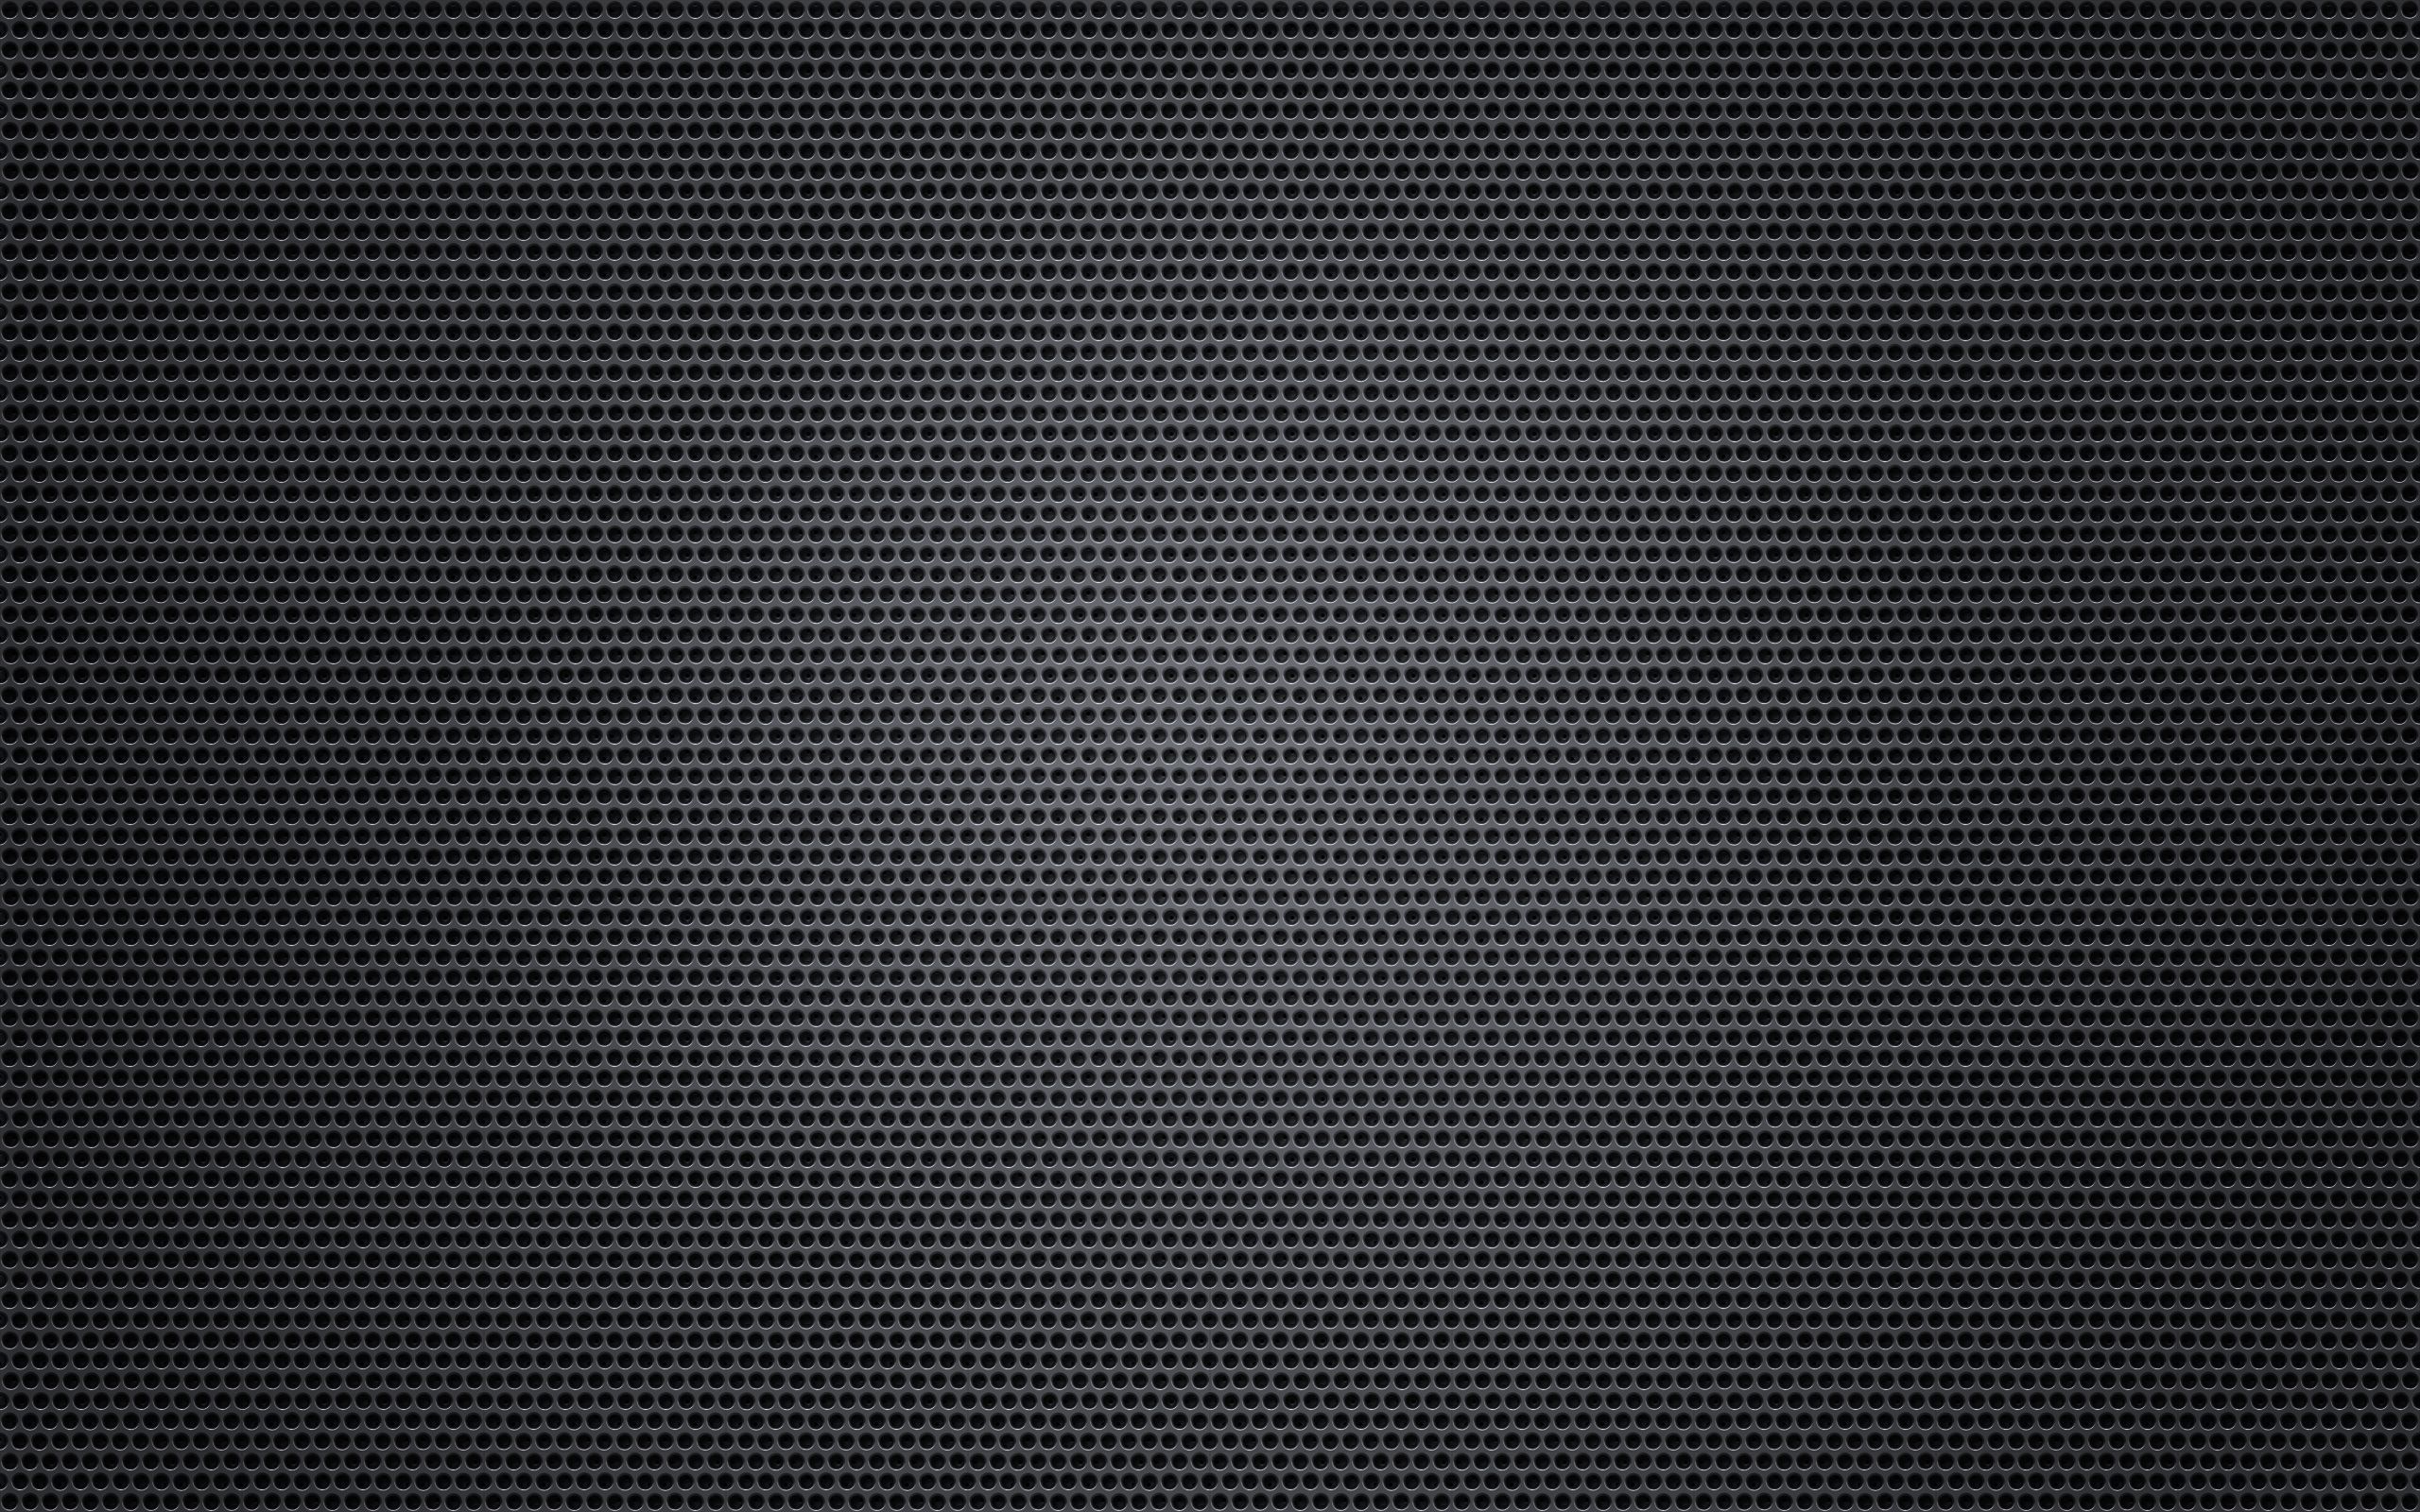 PixLith - Black Metallic Background